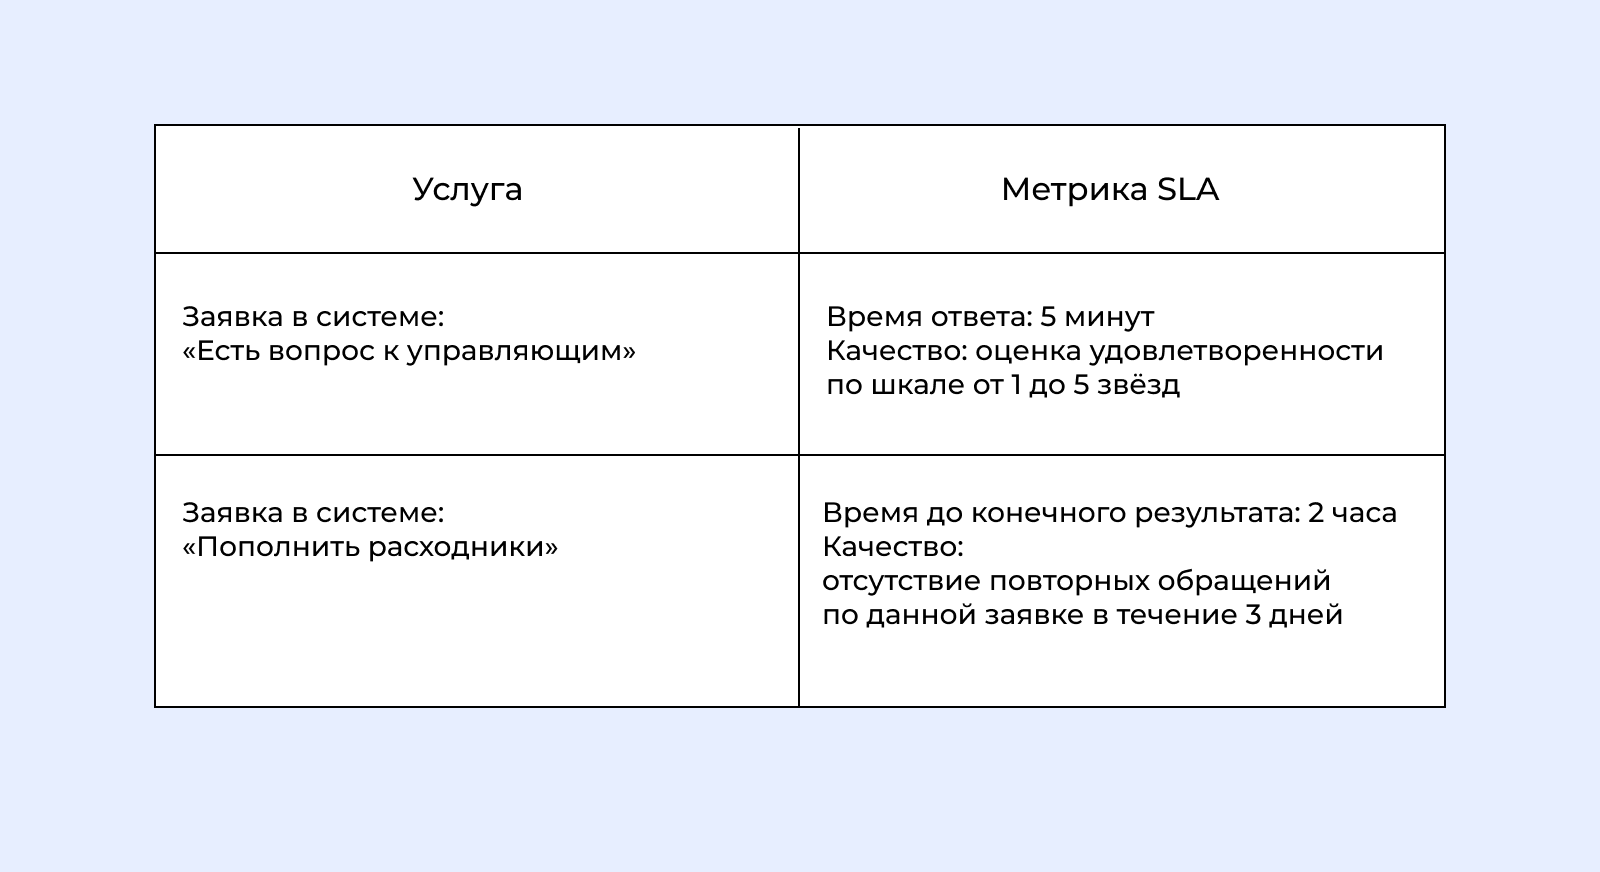 Описание метрик SLA